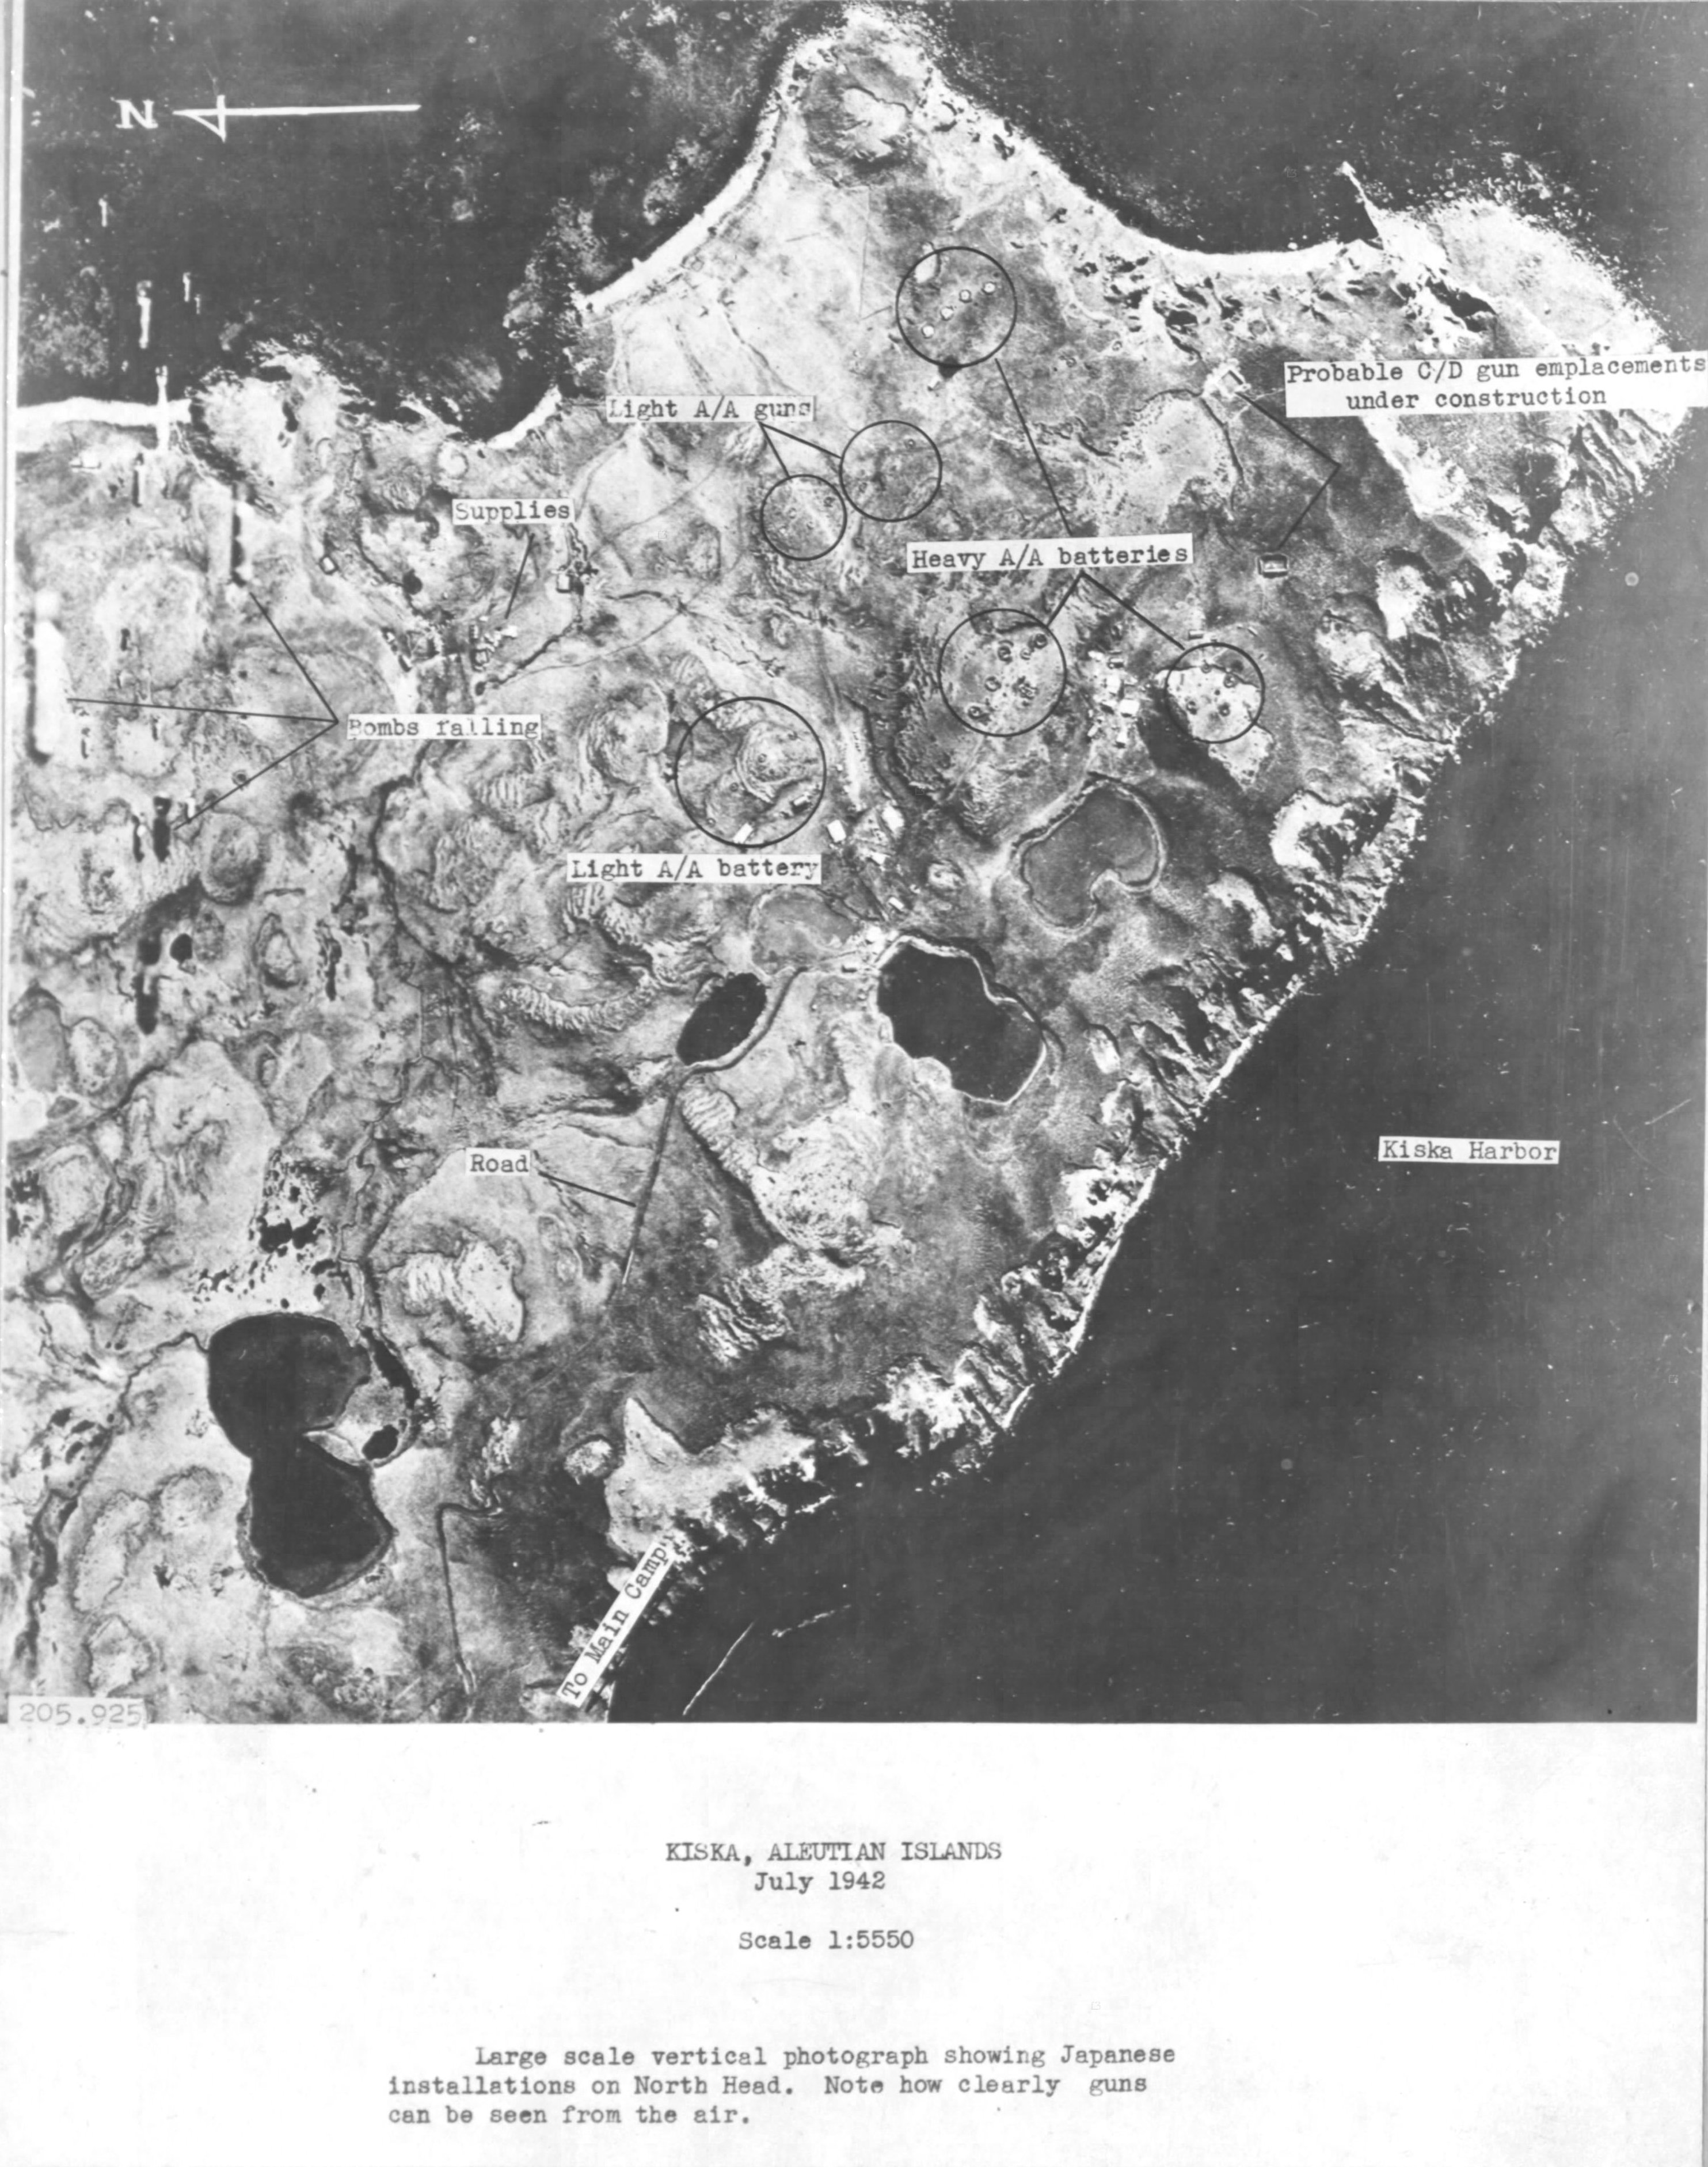 Aerial photograph of North Head Kiska Harbor, Kiska Island, Alaska during a bombing mission, 17 Jul 1942. Note the notations made by the photo analysts.